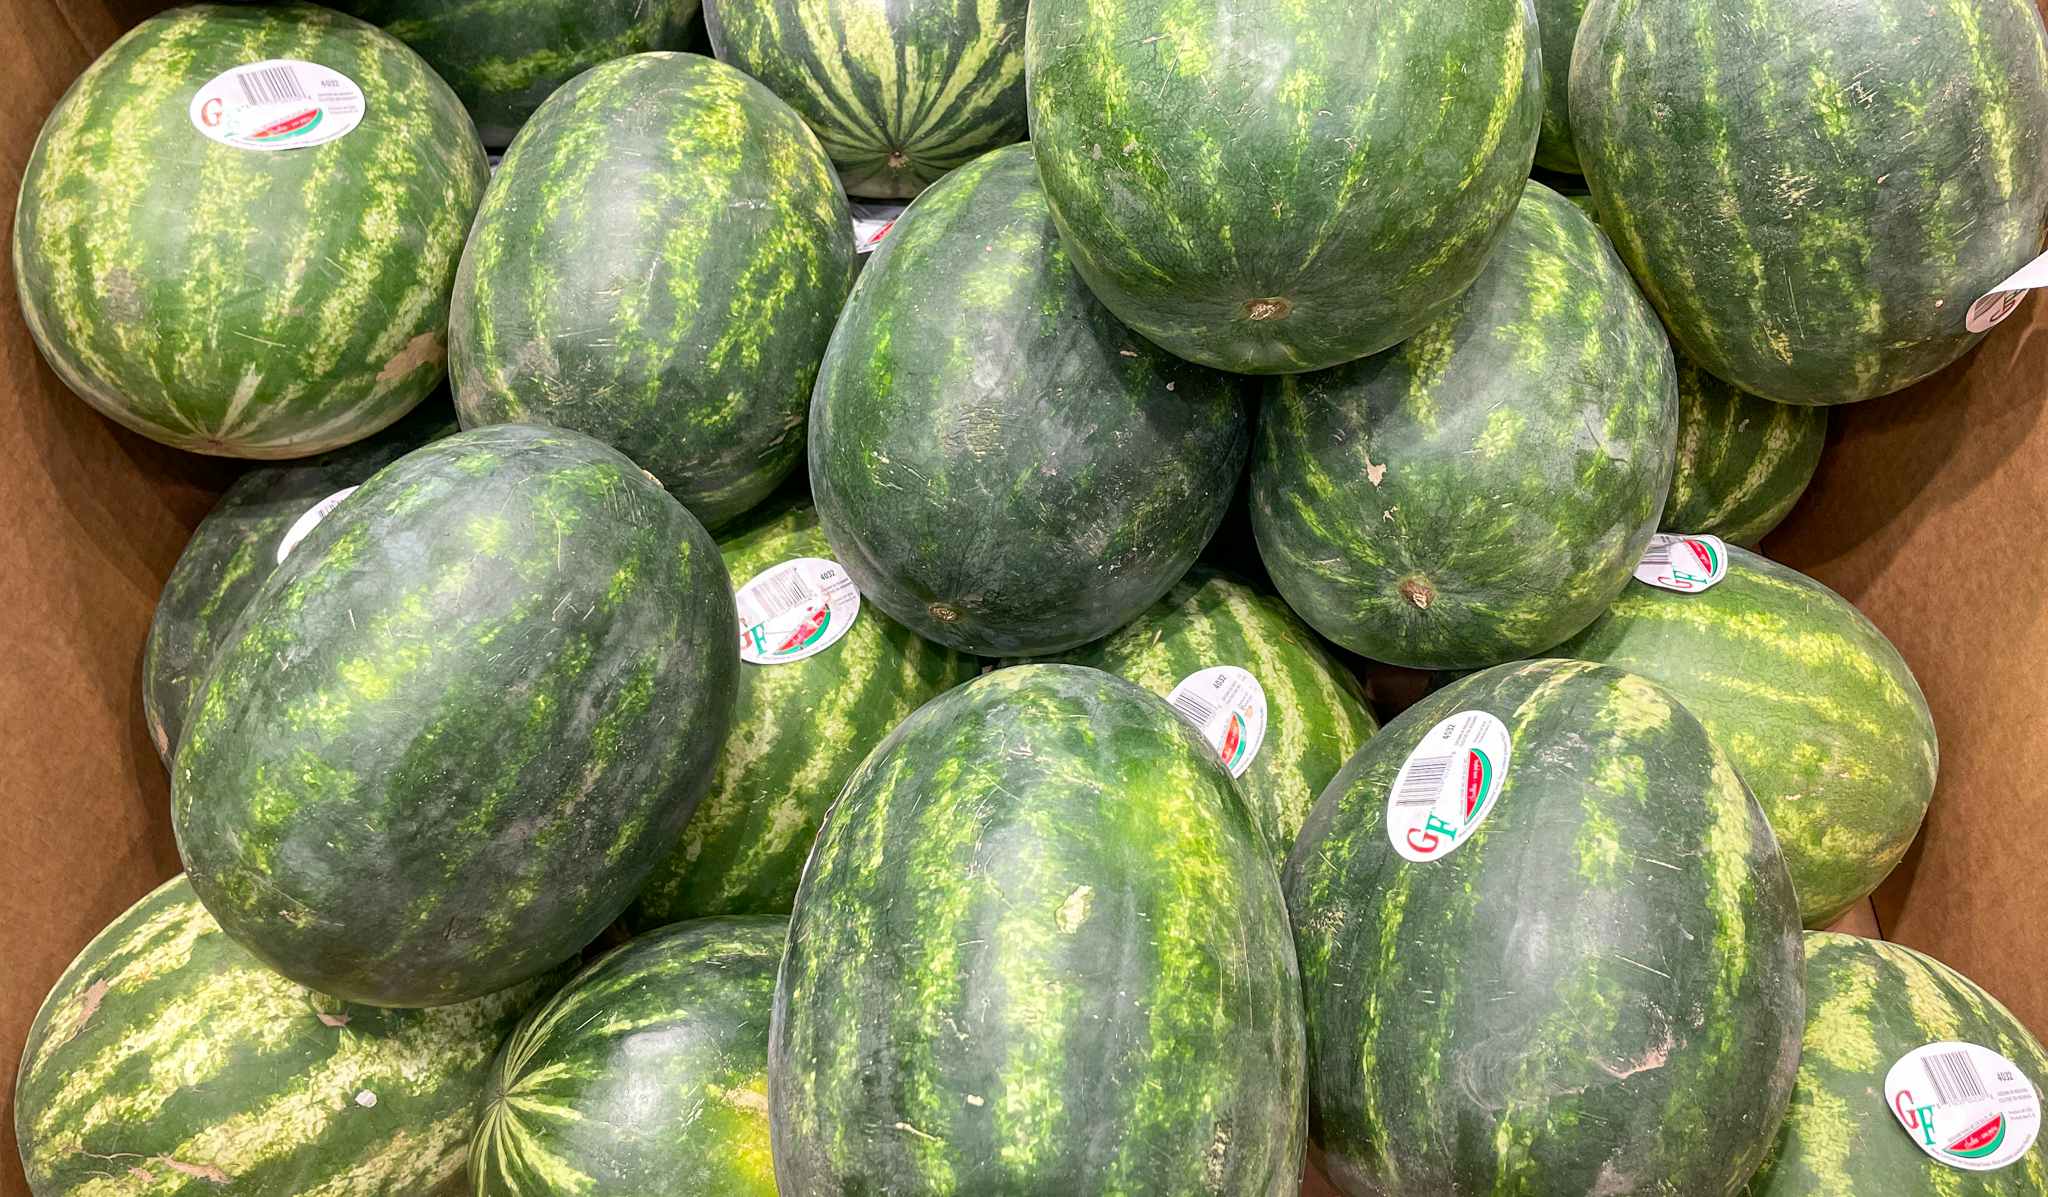 watermelons in a box at aldi